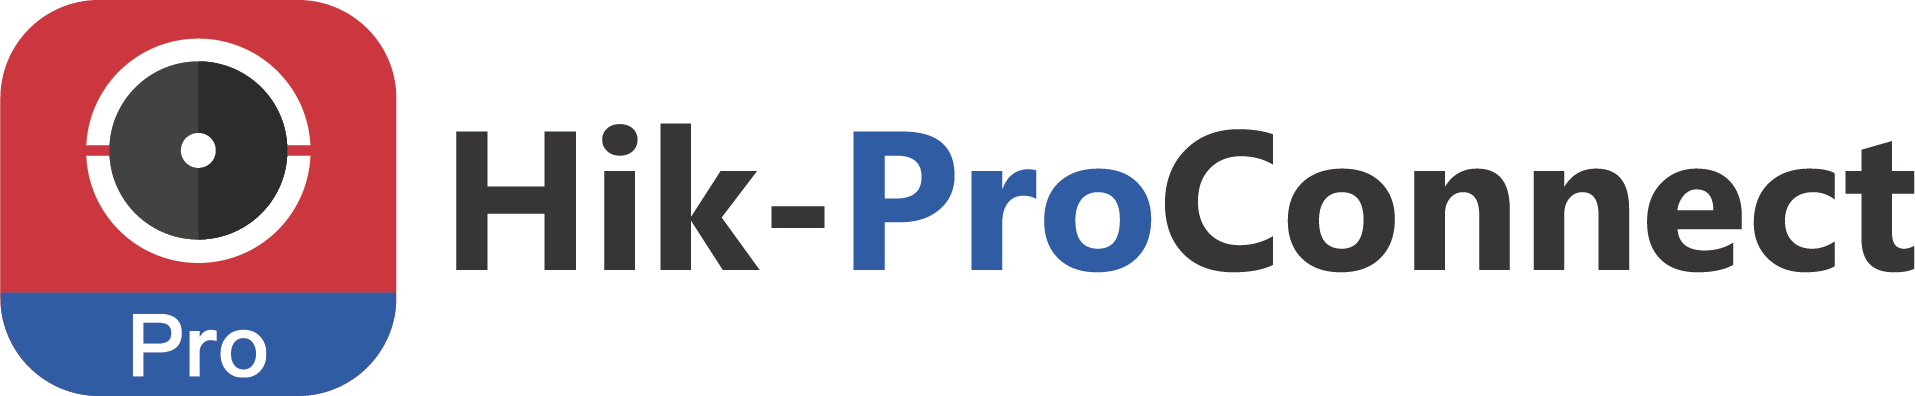 Hik-ProConnect_logo